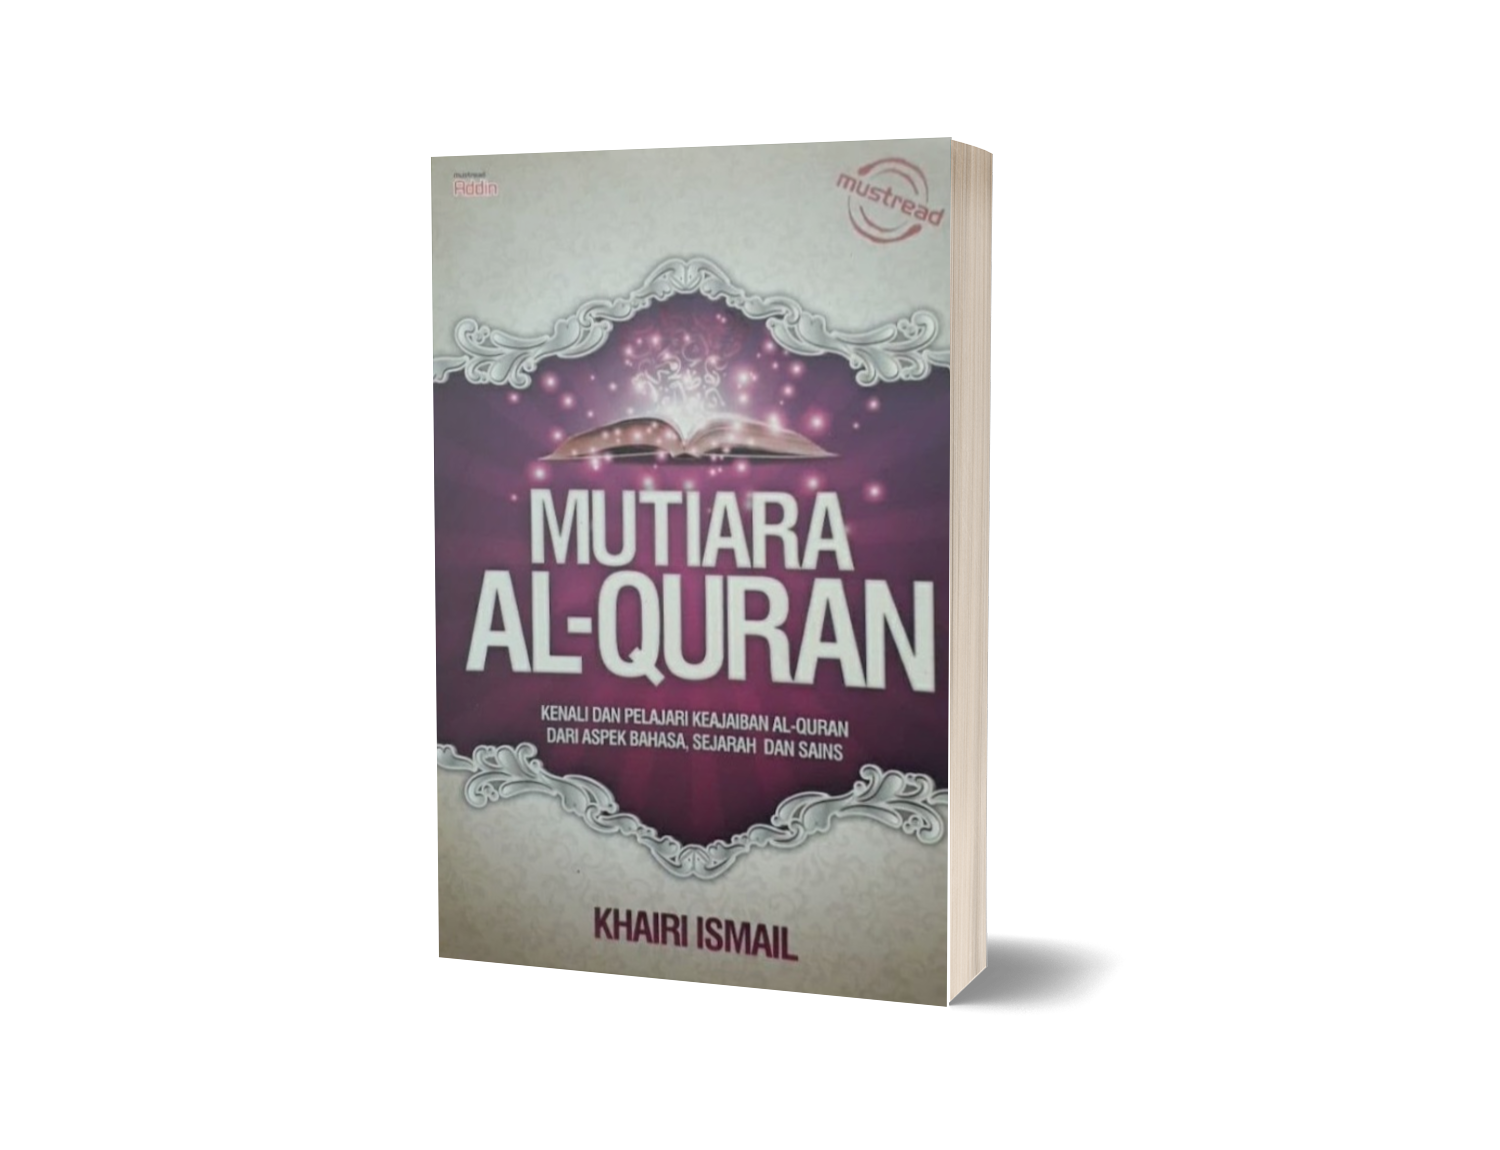 MUTIARA AL-QURAN